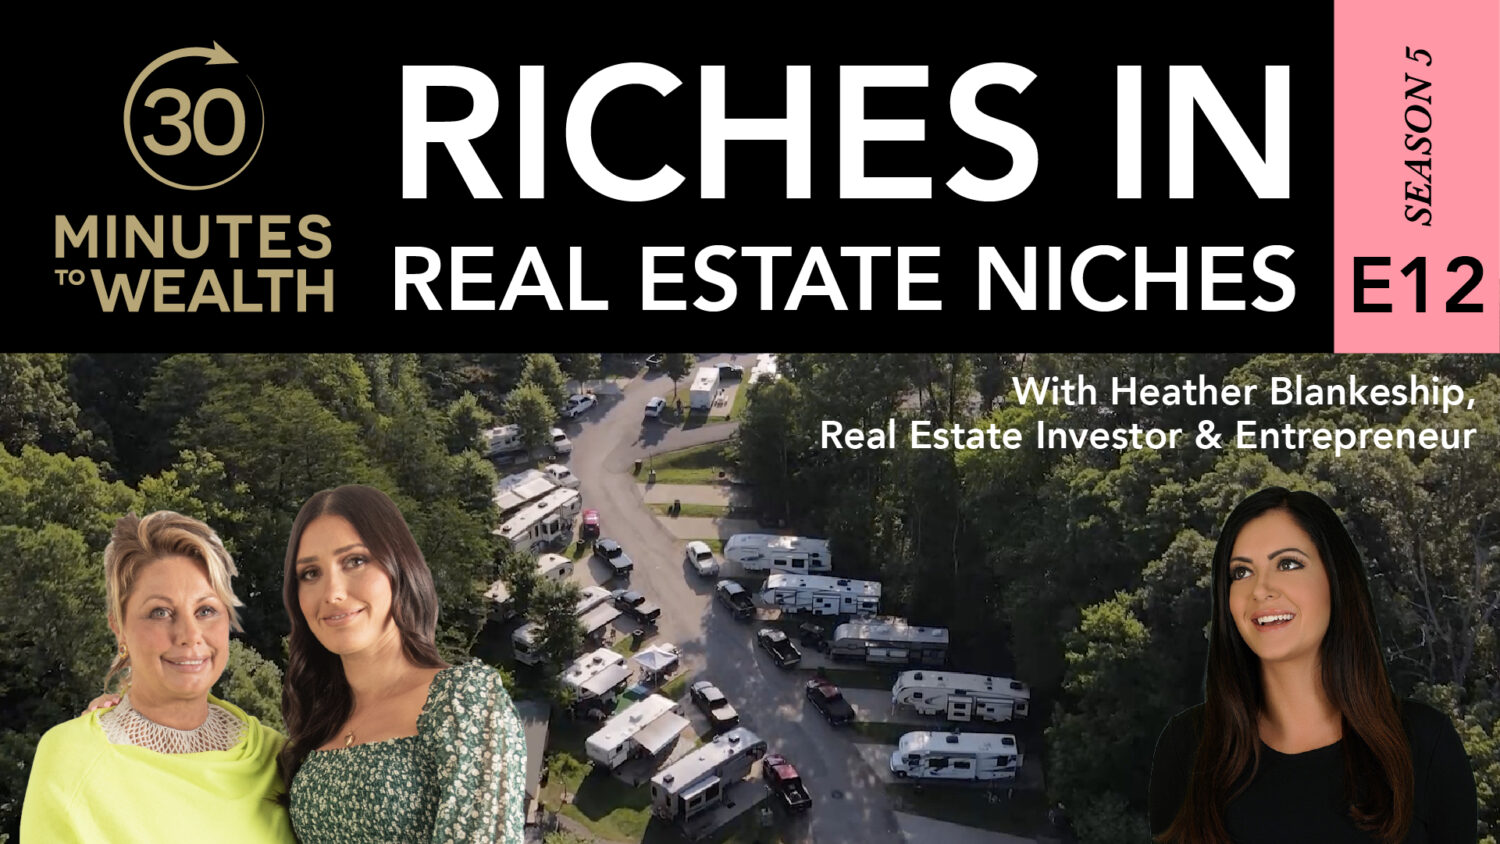 S5 E12 - Riches in Real Estate Niches